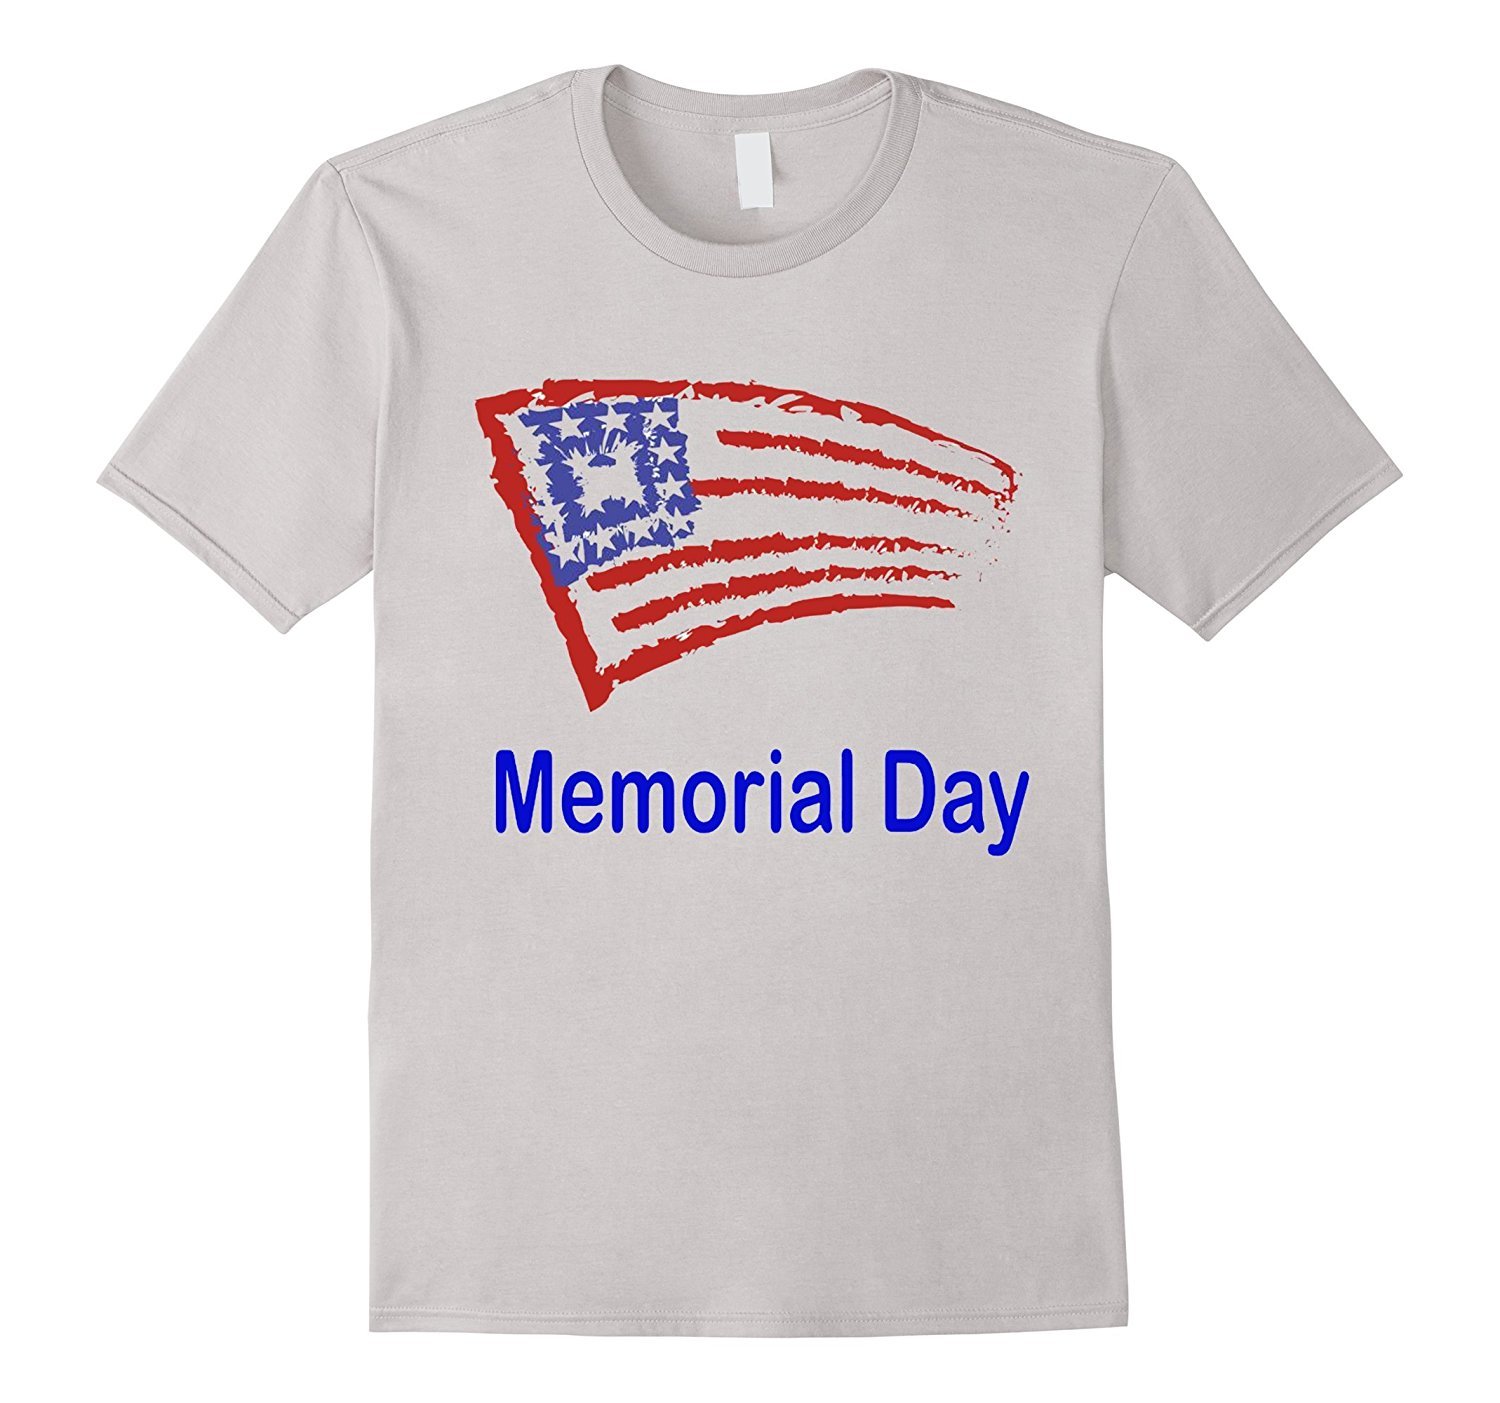 New Shirt - Memorial Day T-shirt Men - T-Shirts, Tank Tops